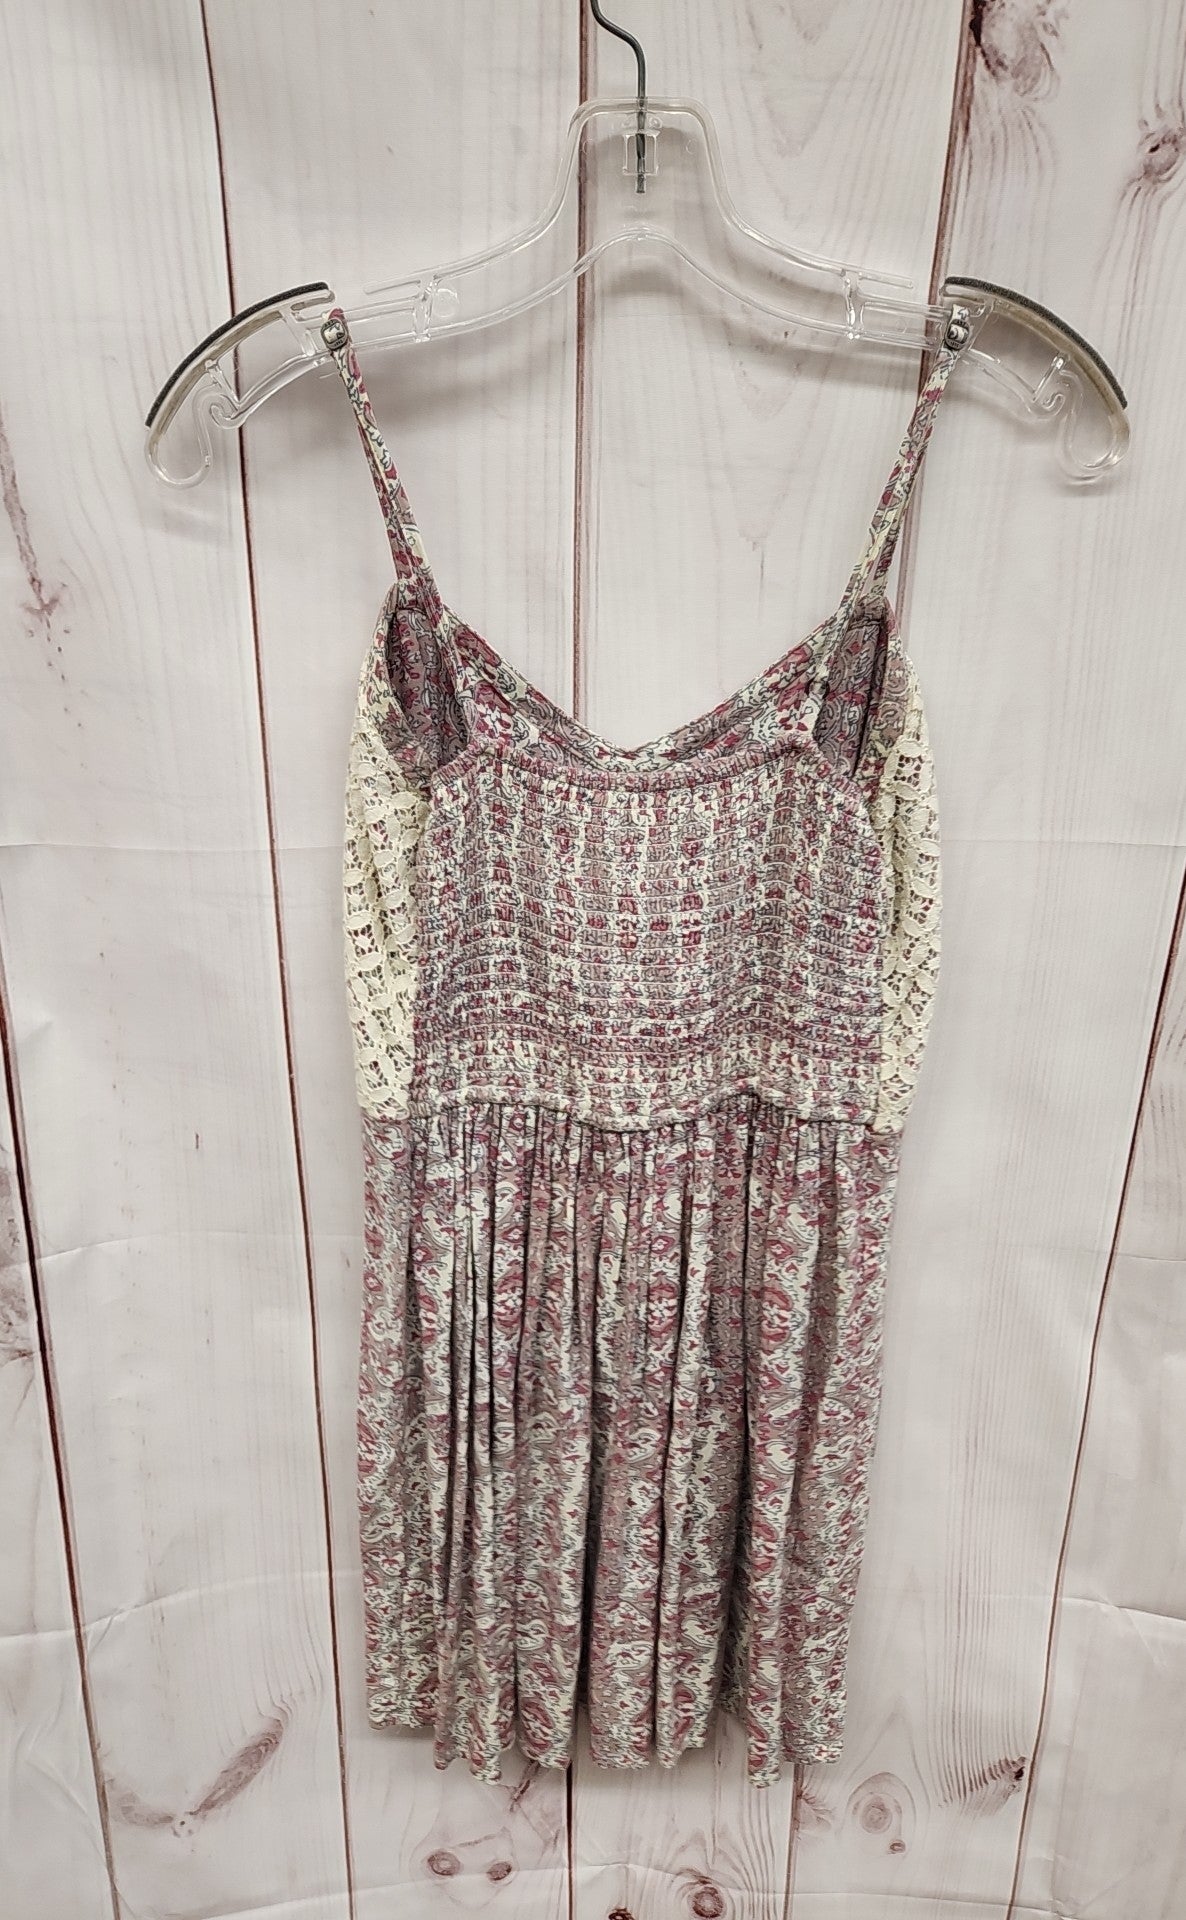 Abercrombie & Fitch Women's Size M Pink Dress